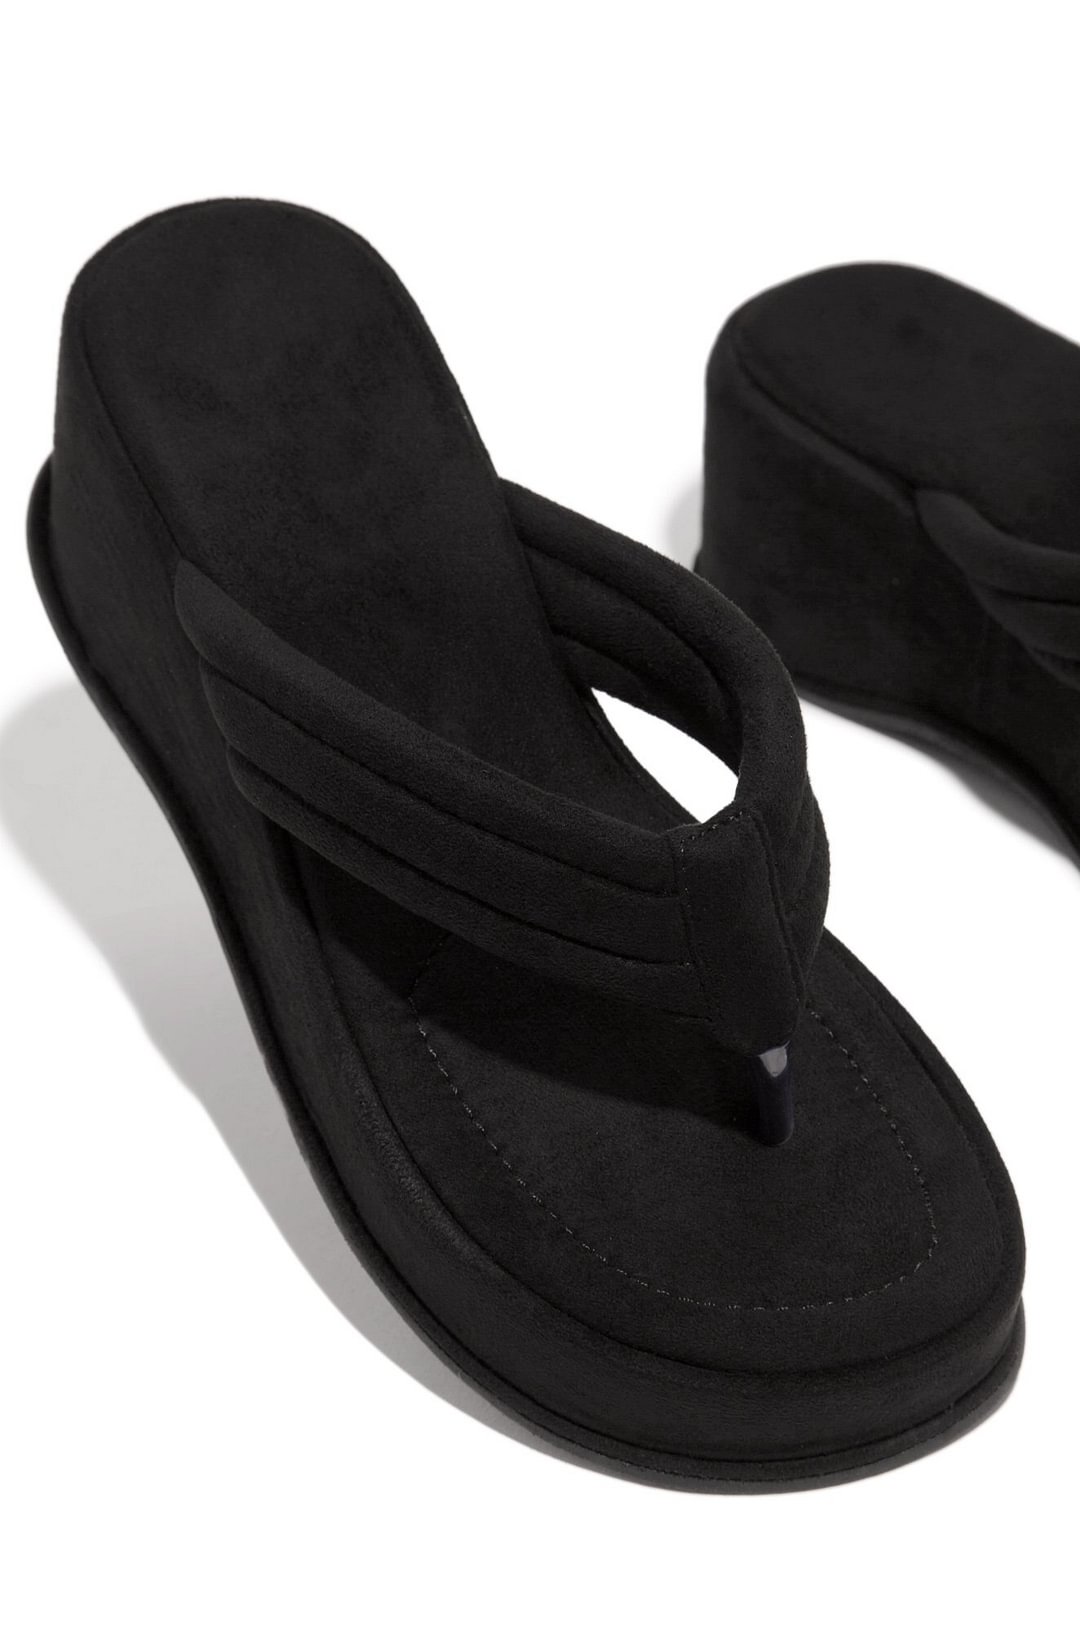 Women Wedges Sandals Summer Solid Color Casual Clip Toe Flip Flops Women Platform Slipper Beach Sandals Light Comfort Shoes 2021